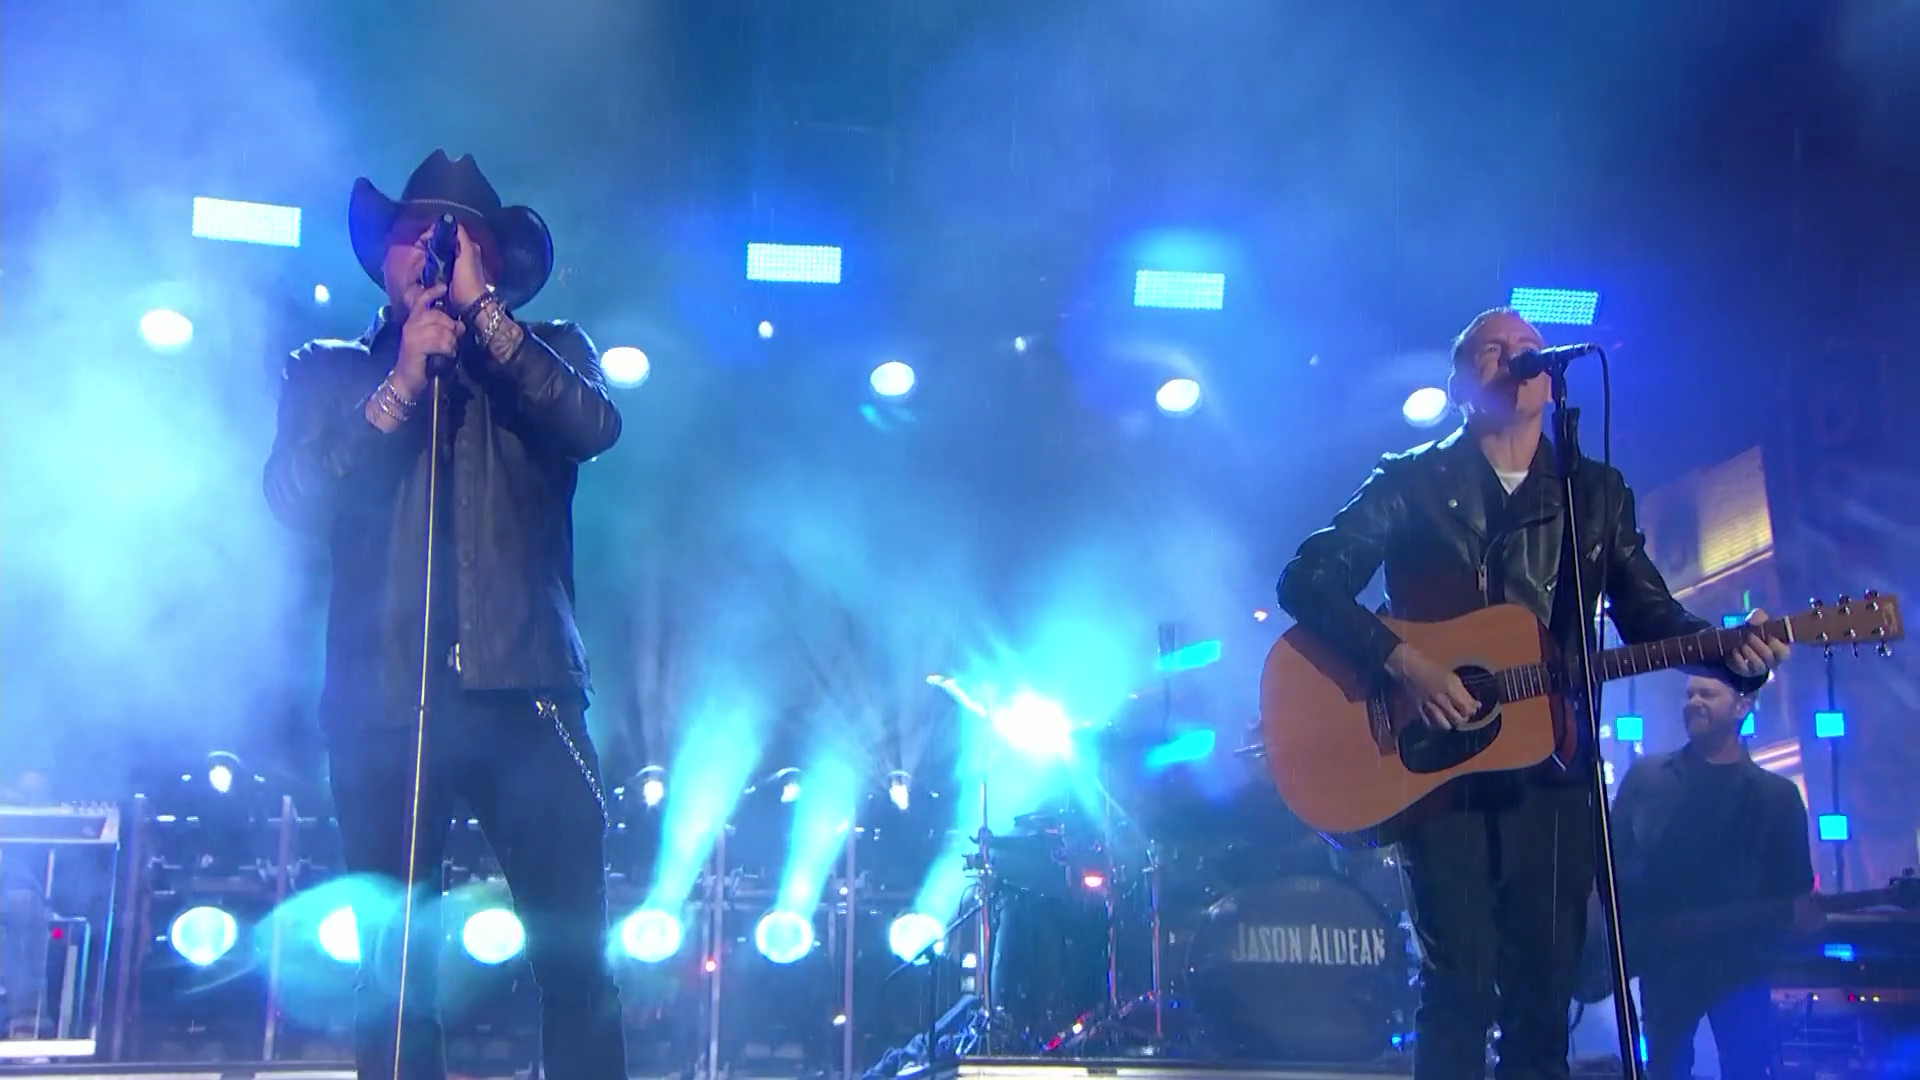 Jason Aldean and Bryan Adams perform "Heaven."